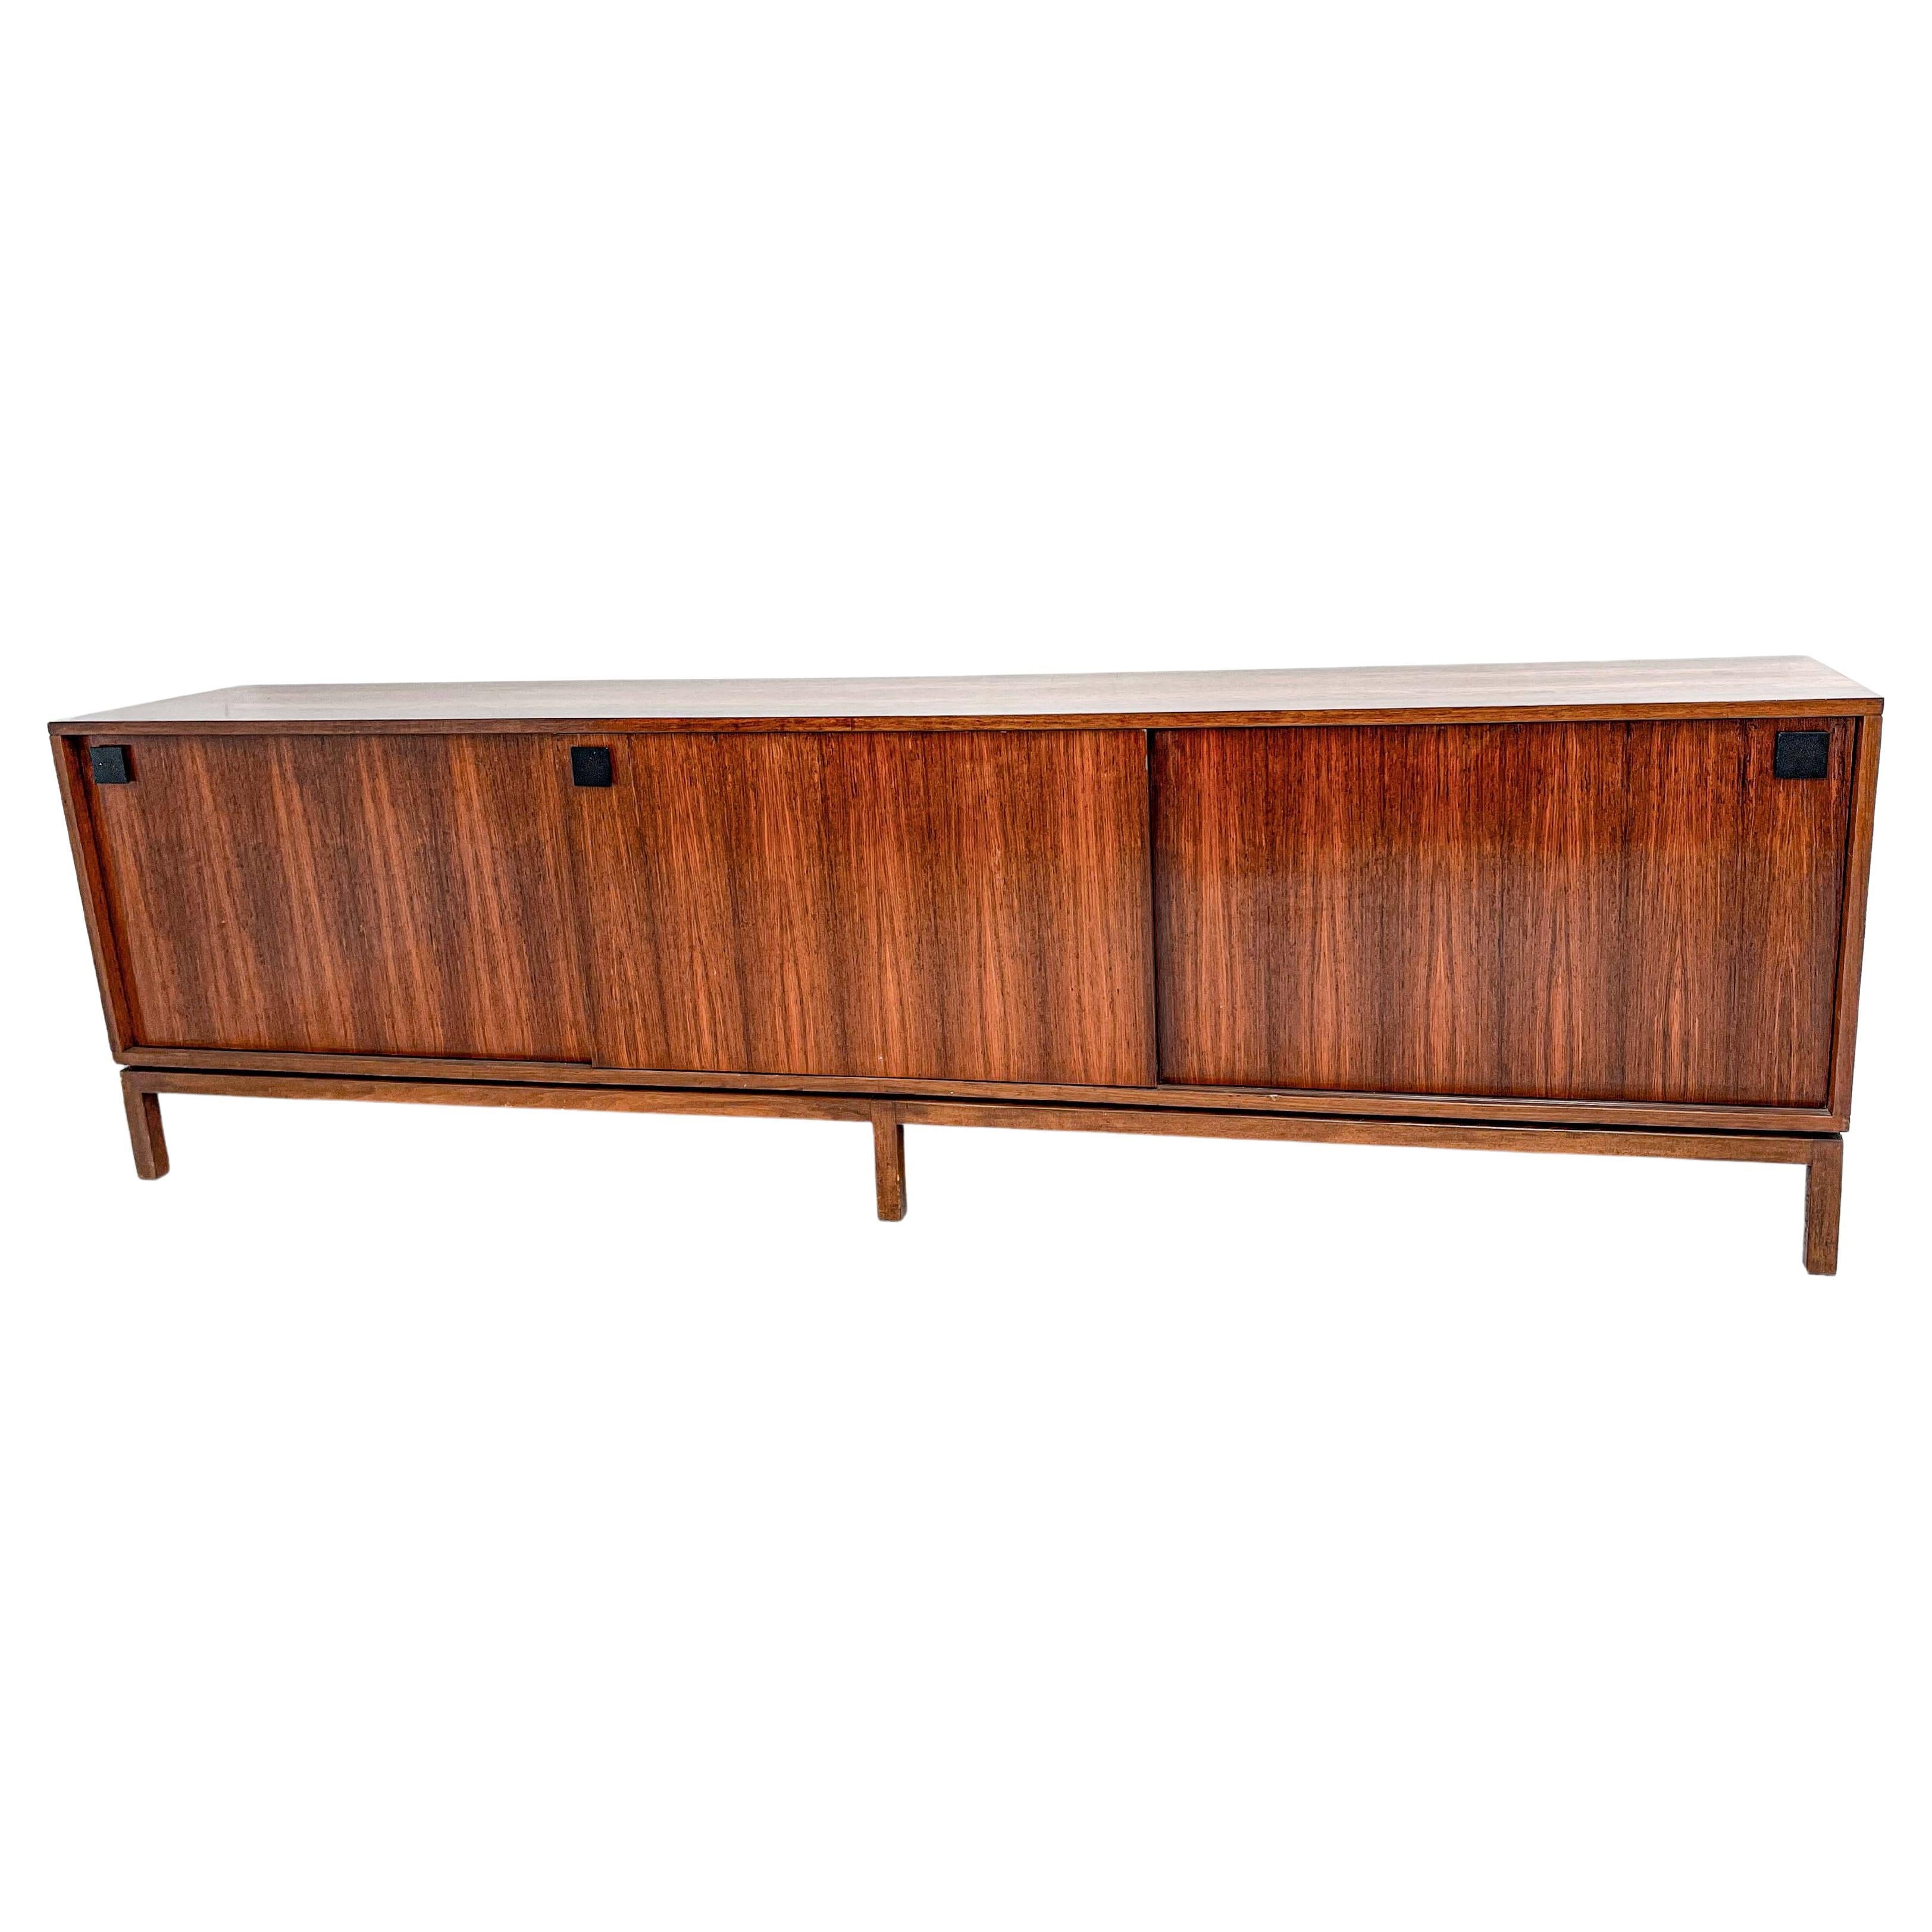 Alfred Hendrickx for Belform xxl sideboard - Model 440, 1960s